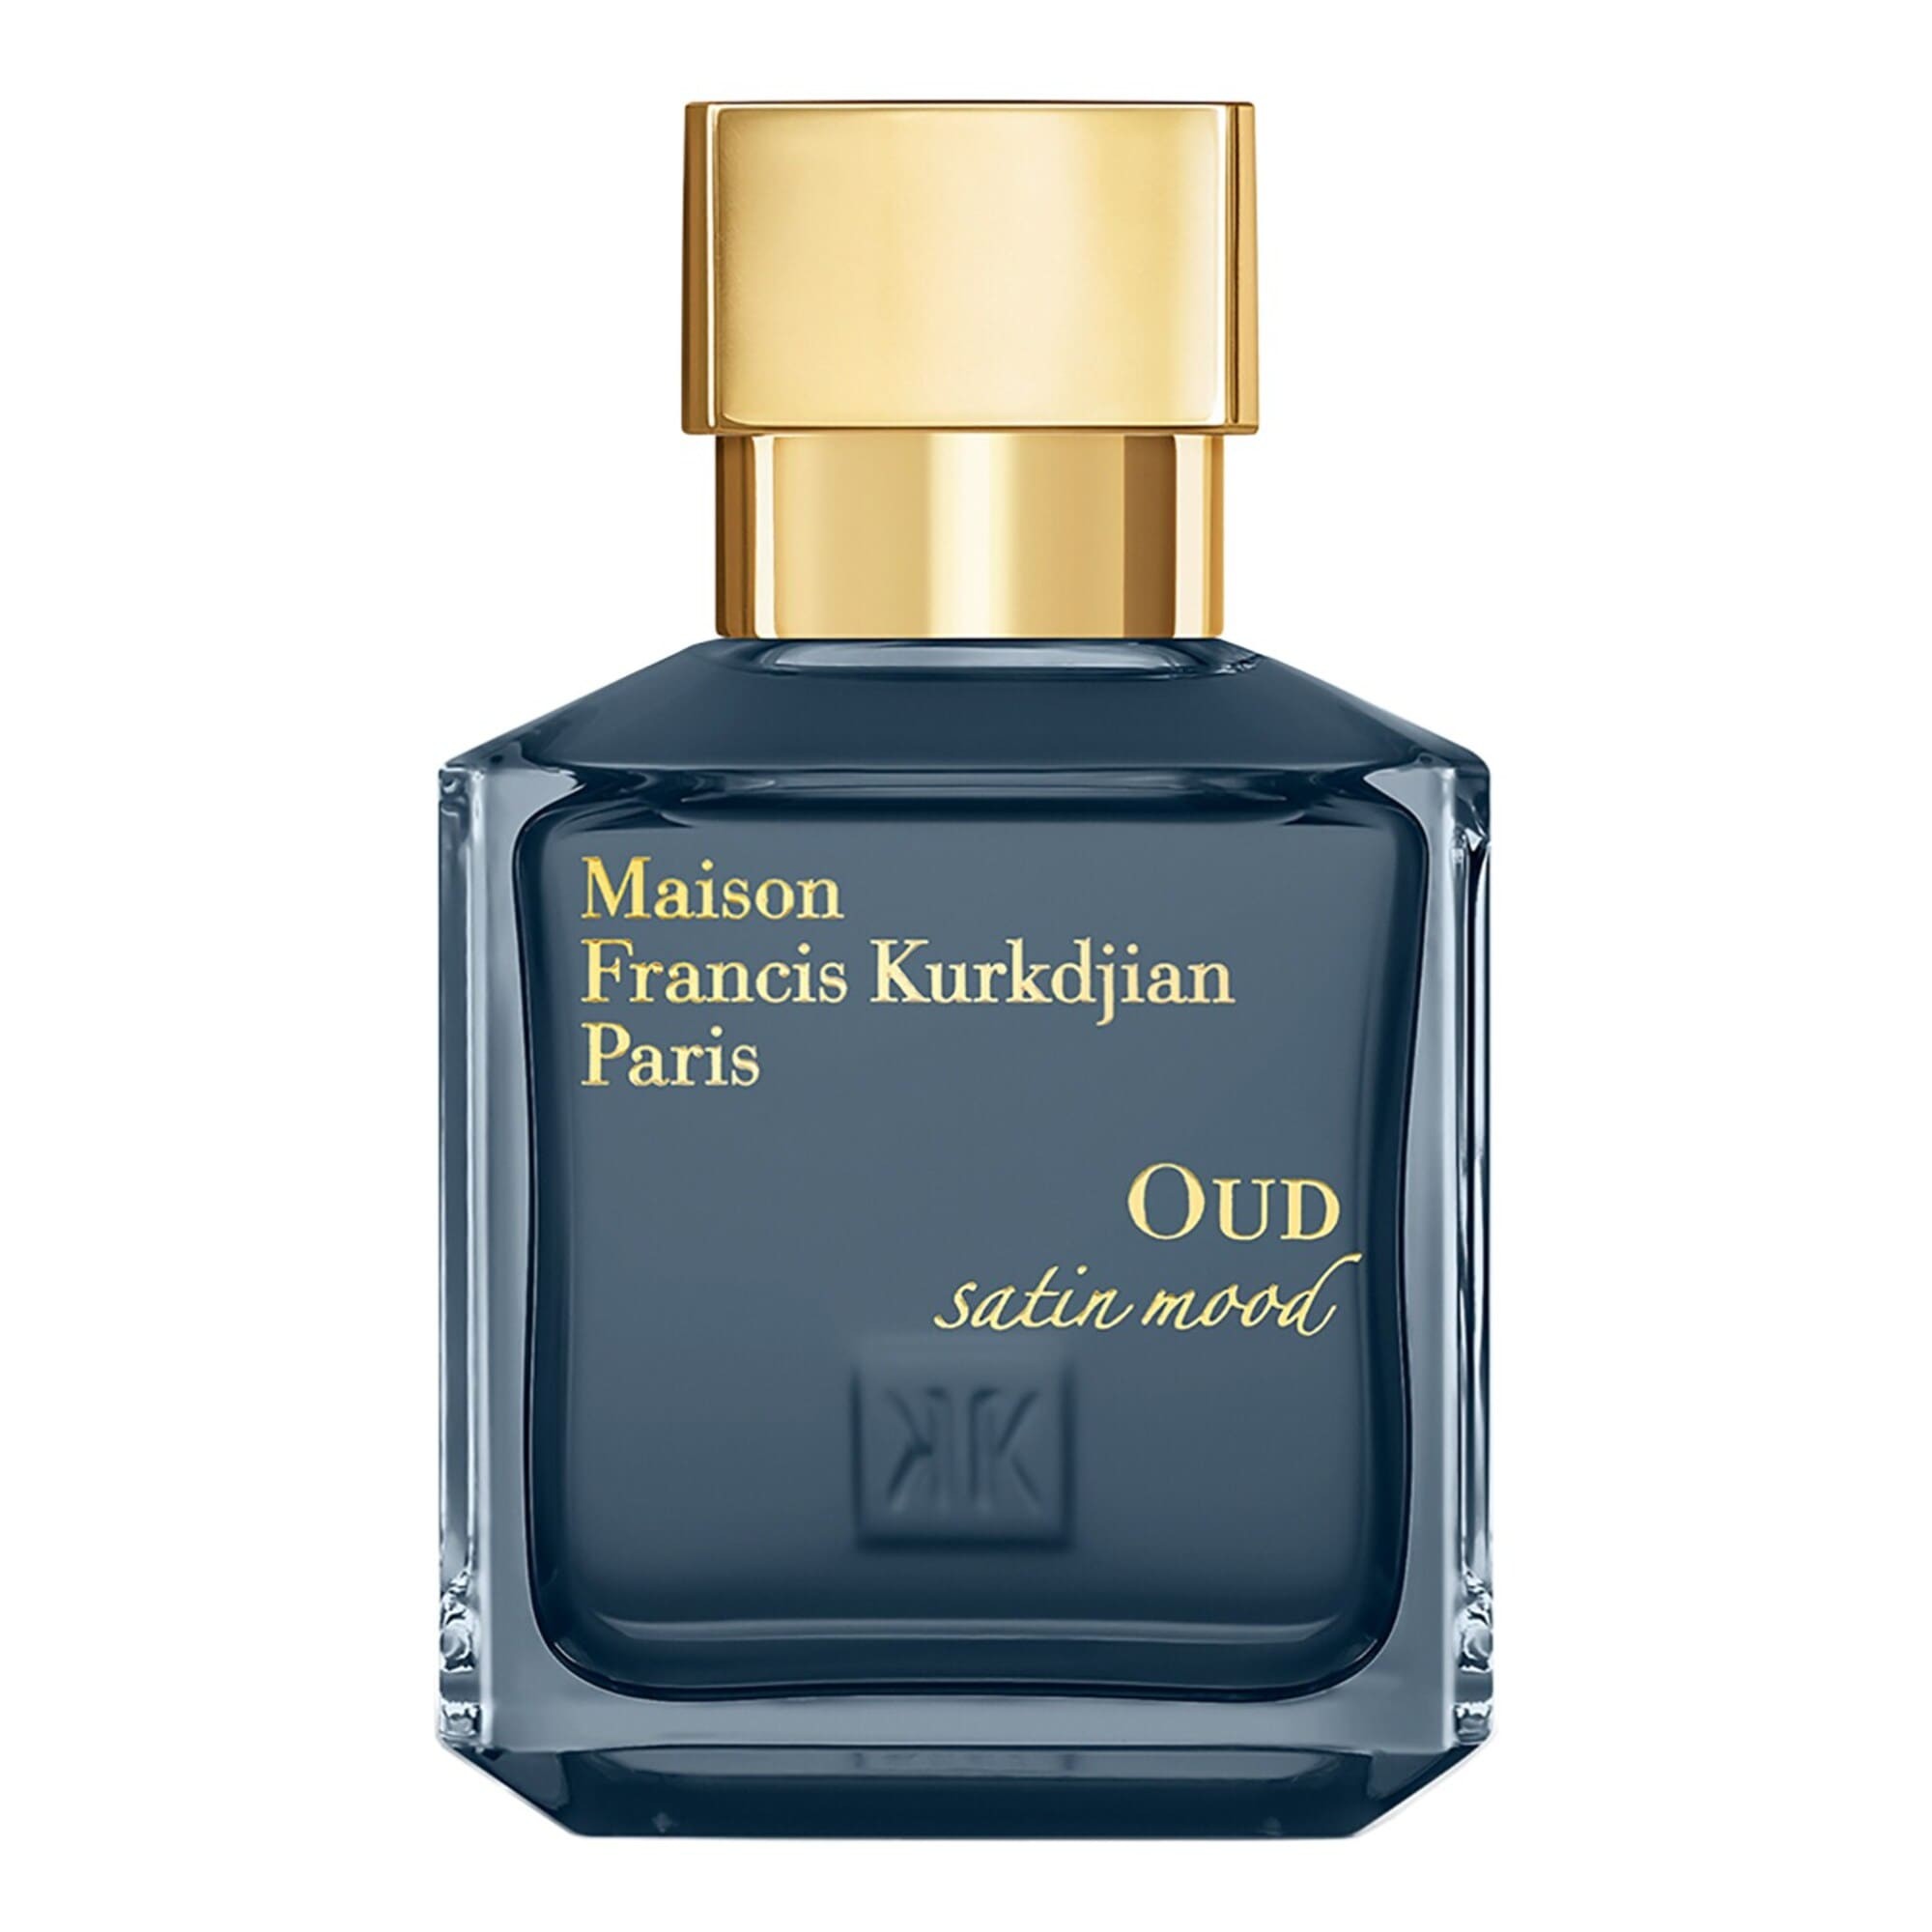 Maison Francis Kurkdjian Oud Satin Mood Eau De Parfum 70 mL